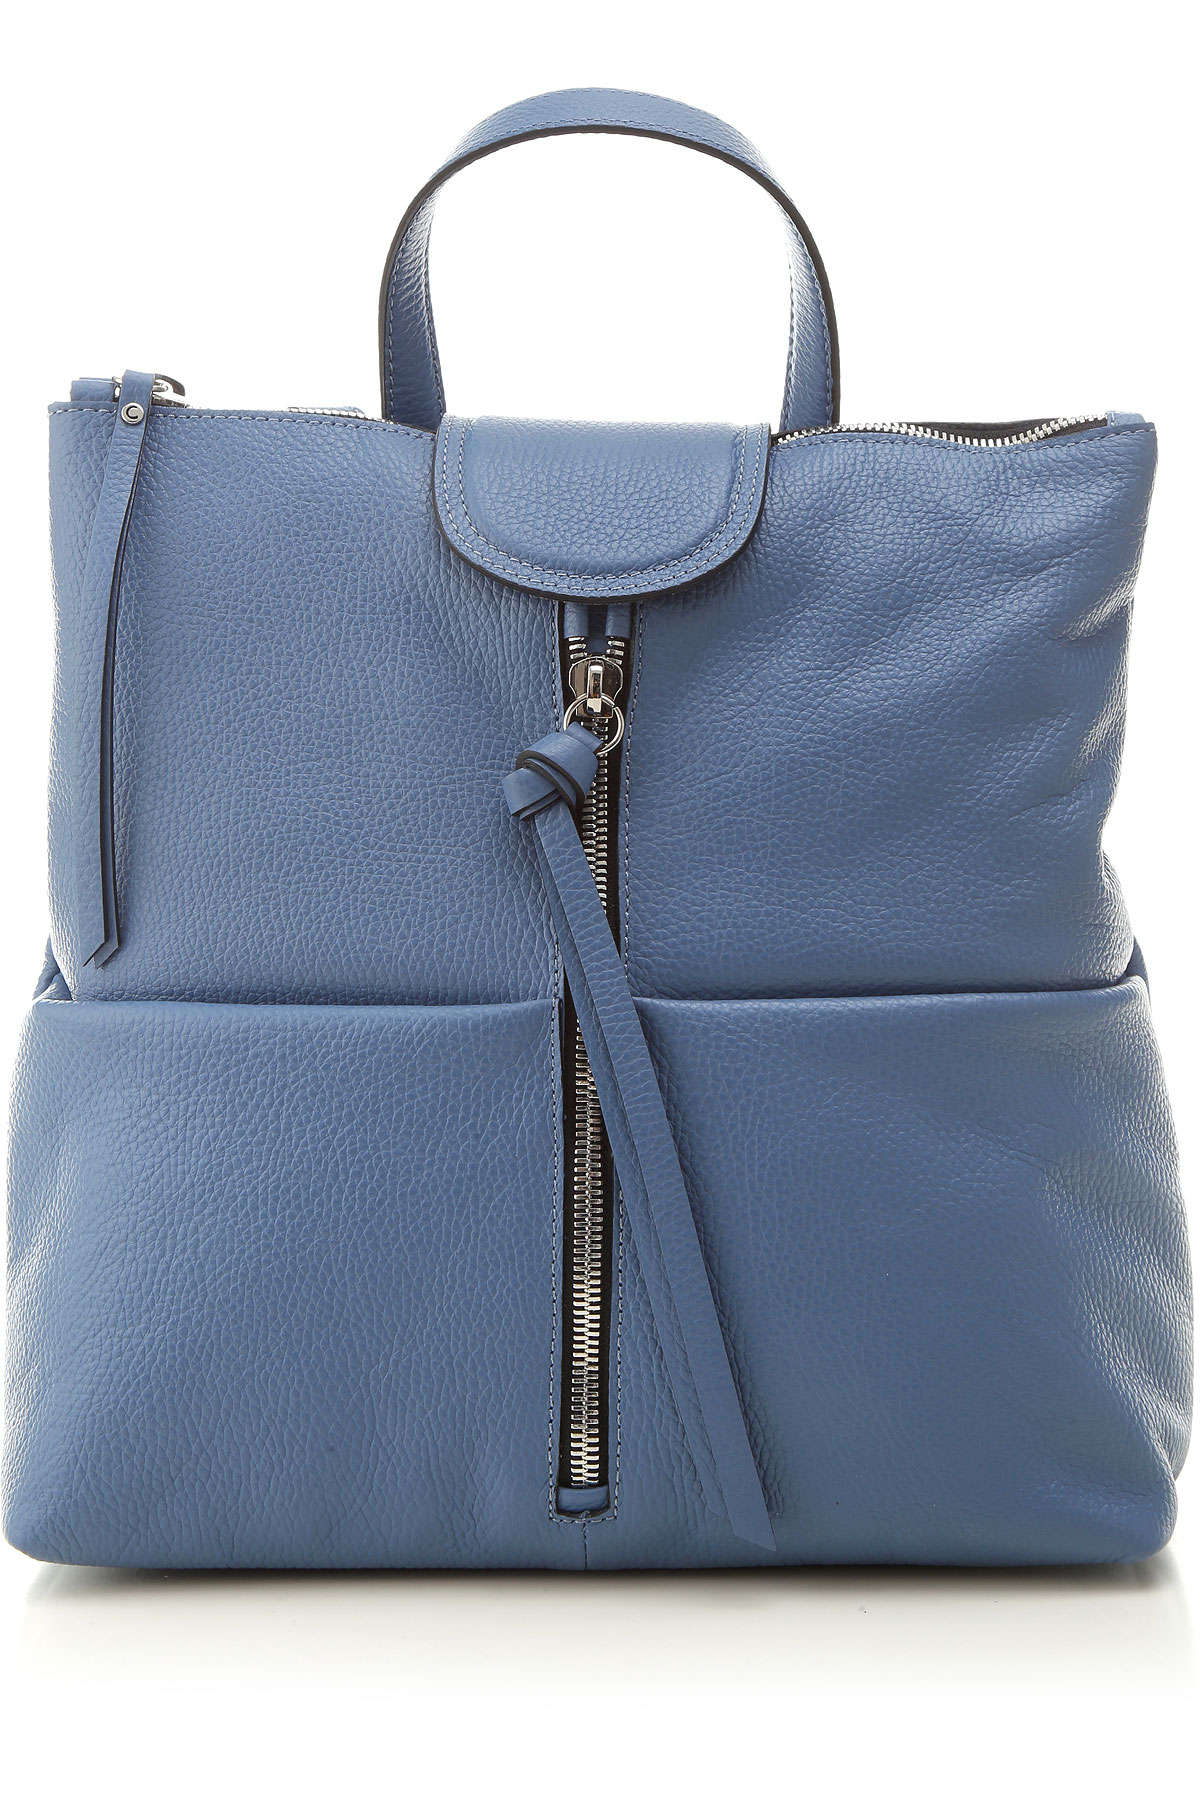 Handbags Gianni Chiarini, Style code: zn7040--